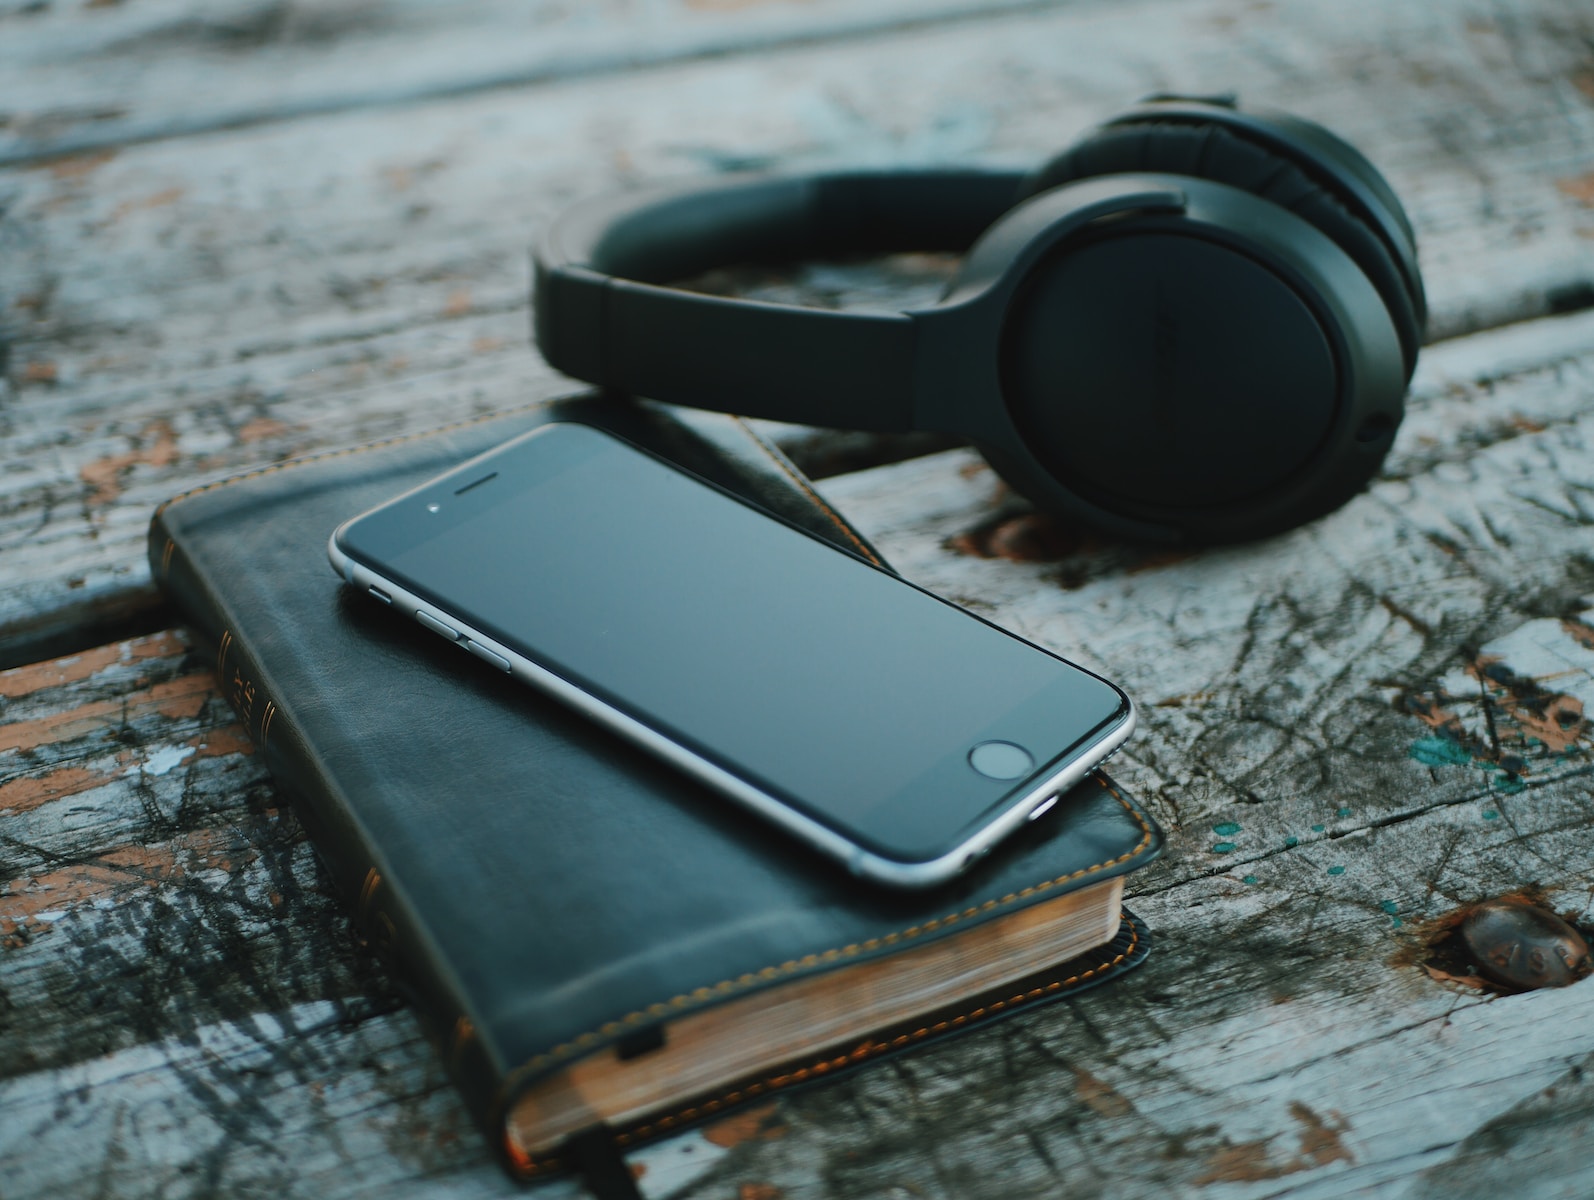 space gray iPhone 6 on book near black wireless headphones